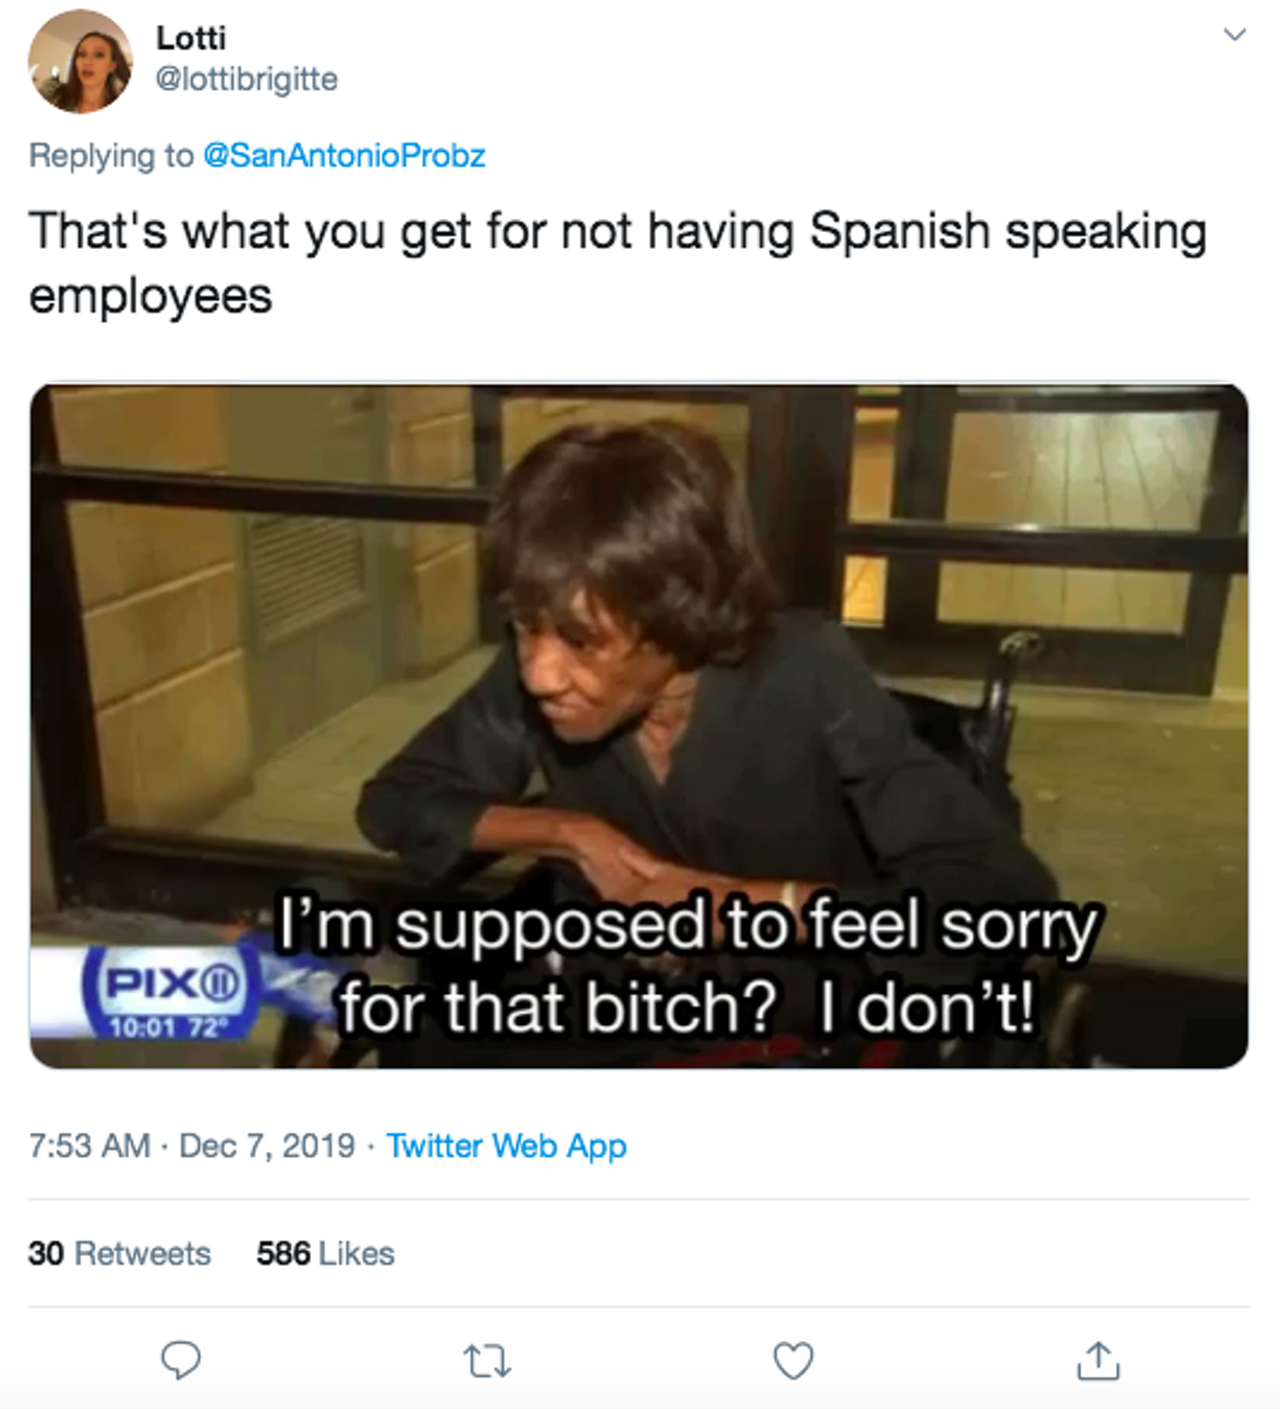 Twitter Reacts to a San Antonio News Station Wishing "Chewpa Mi Verga" a Happy Birthday